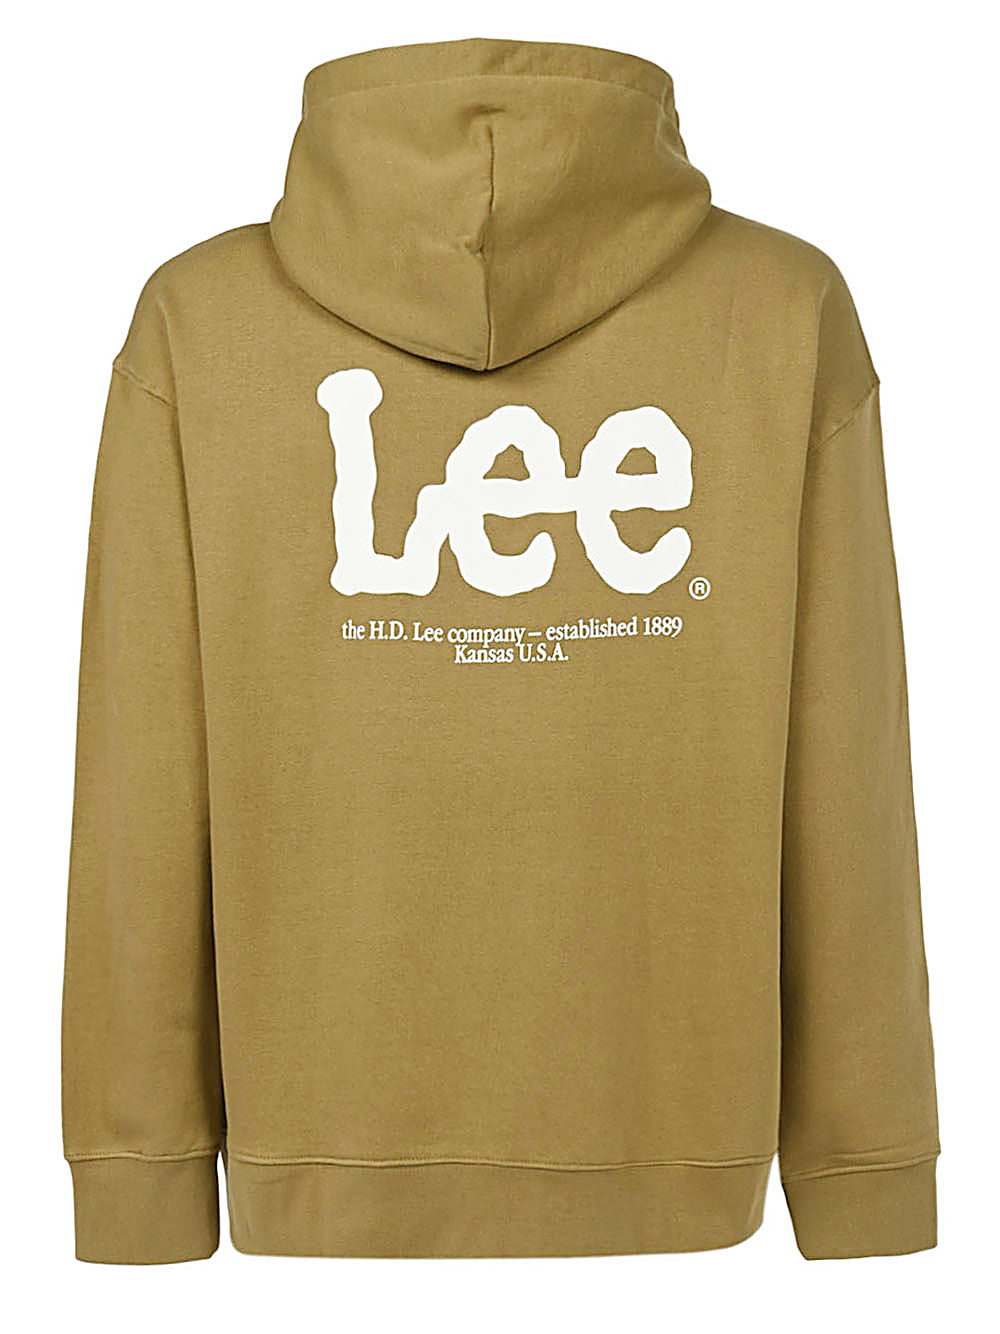 Lee Jeans LEE JEANS- Logo Cotton Hoodie